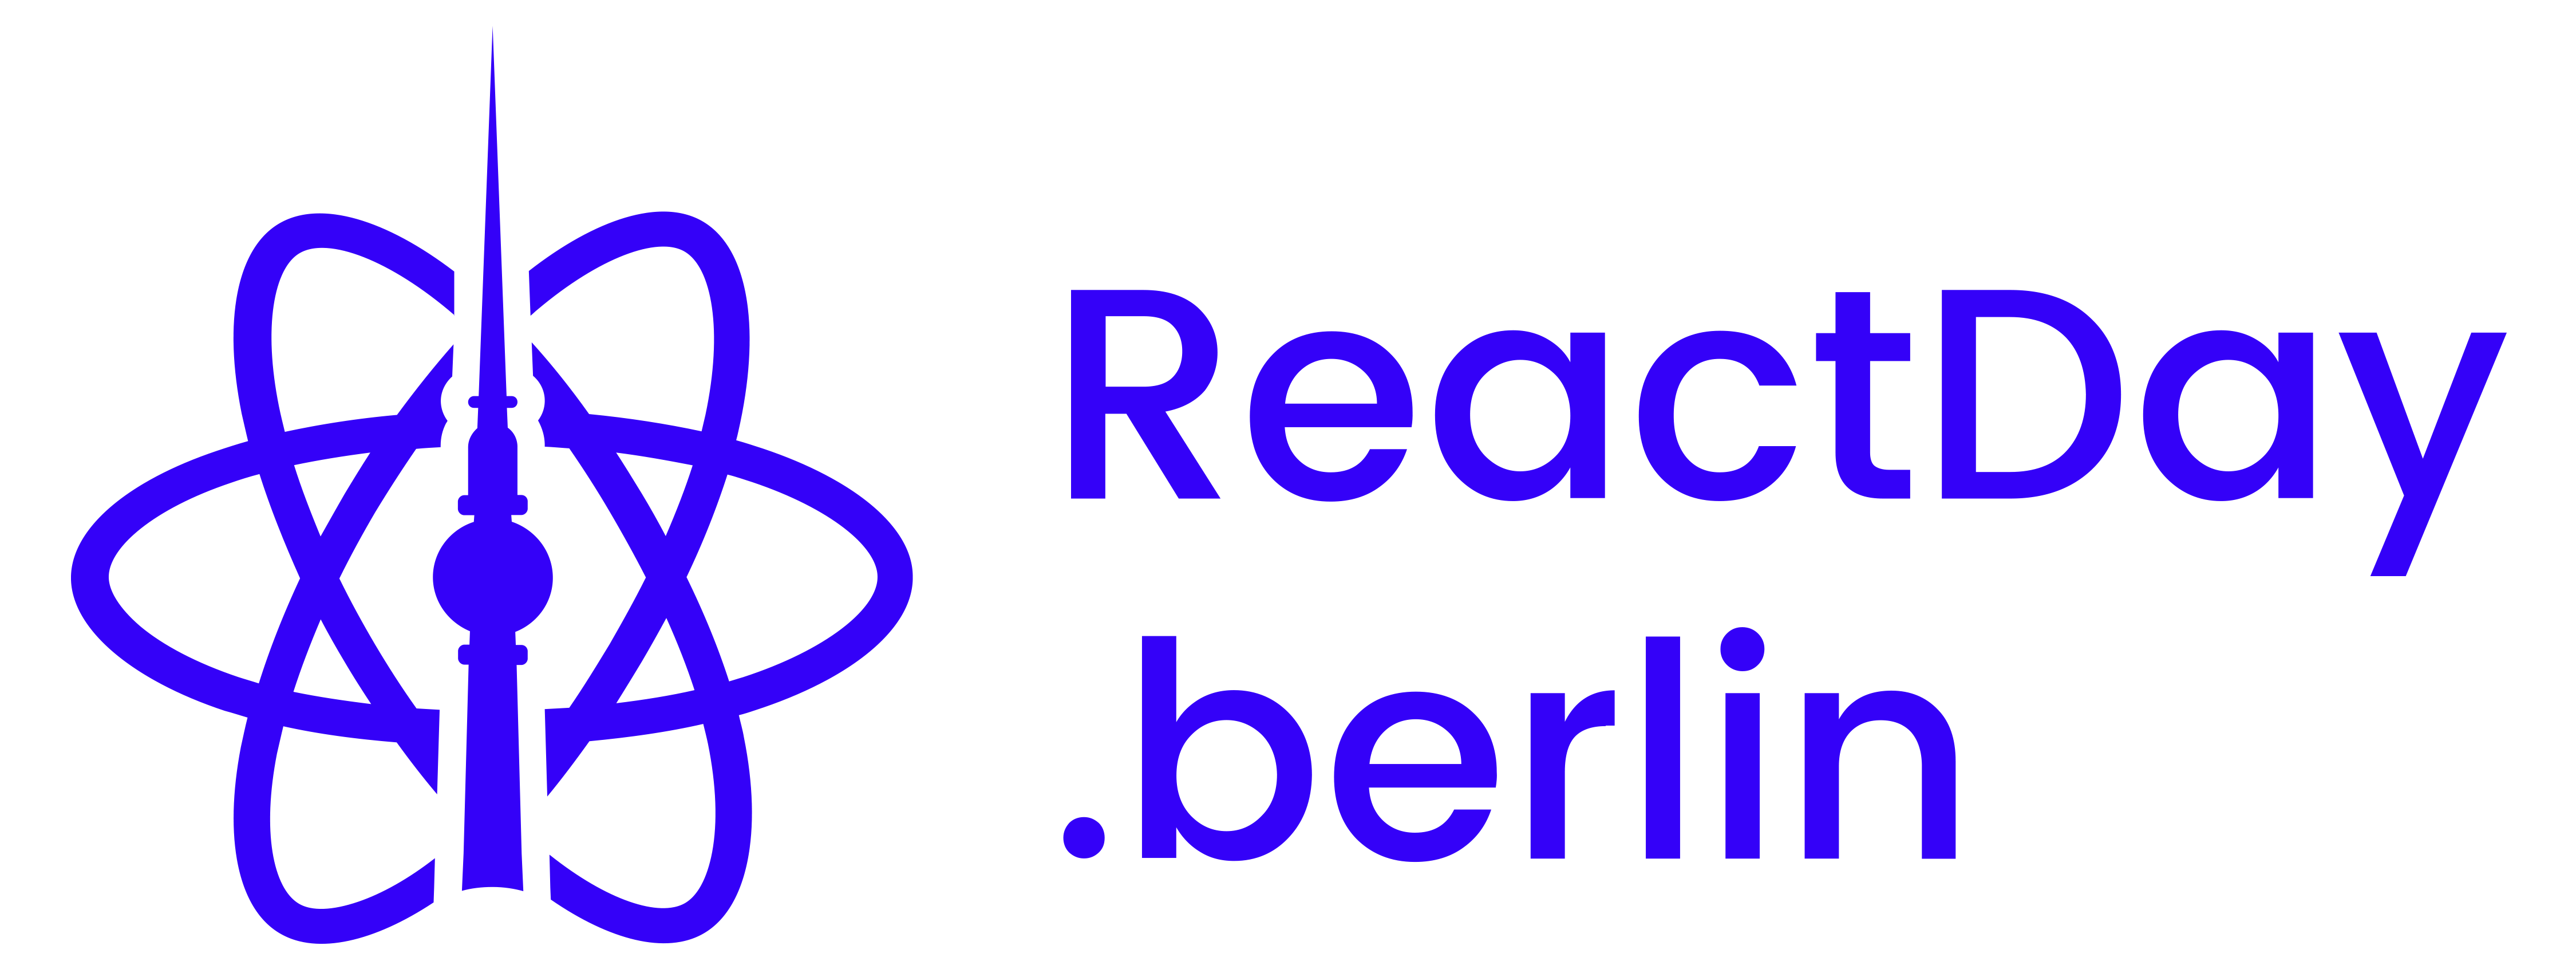 React Day Berlin